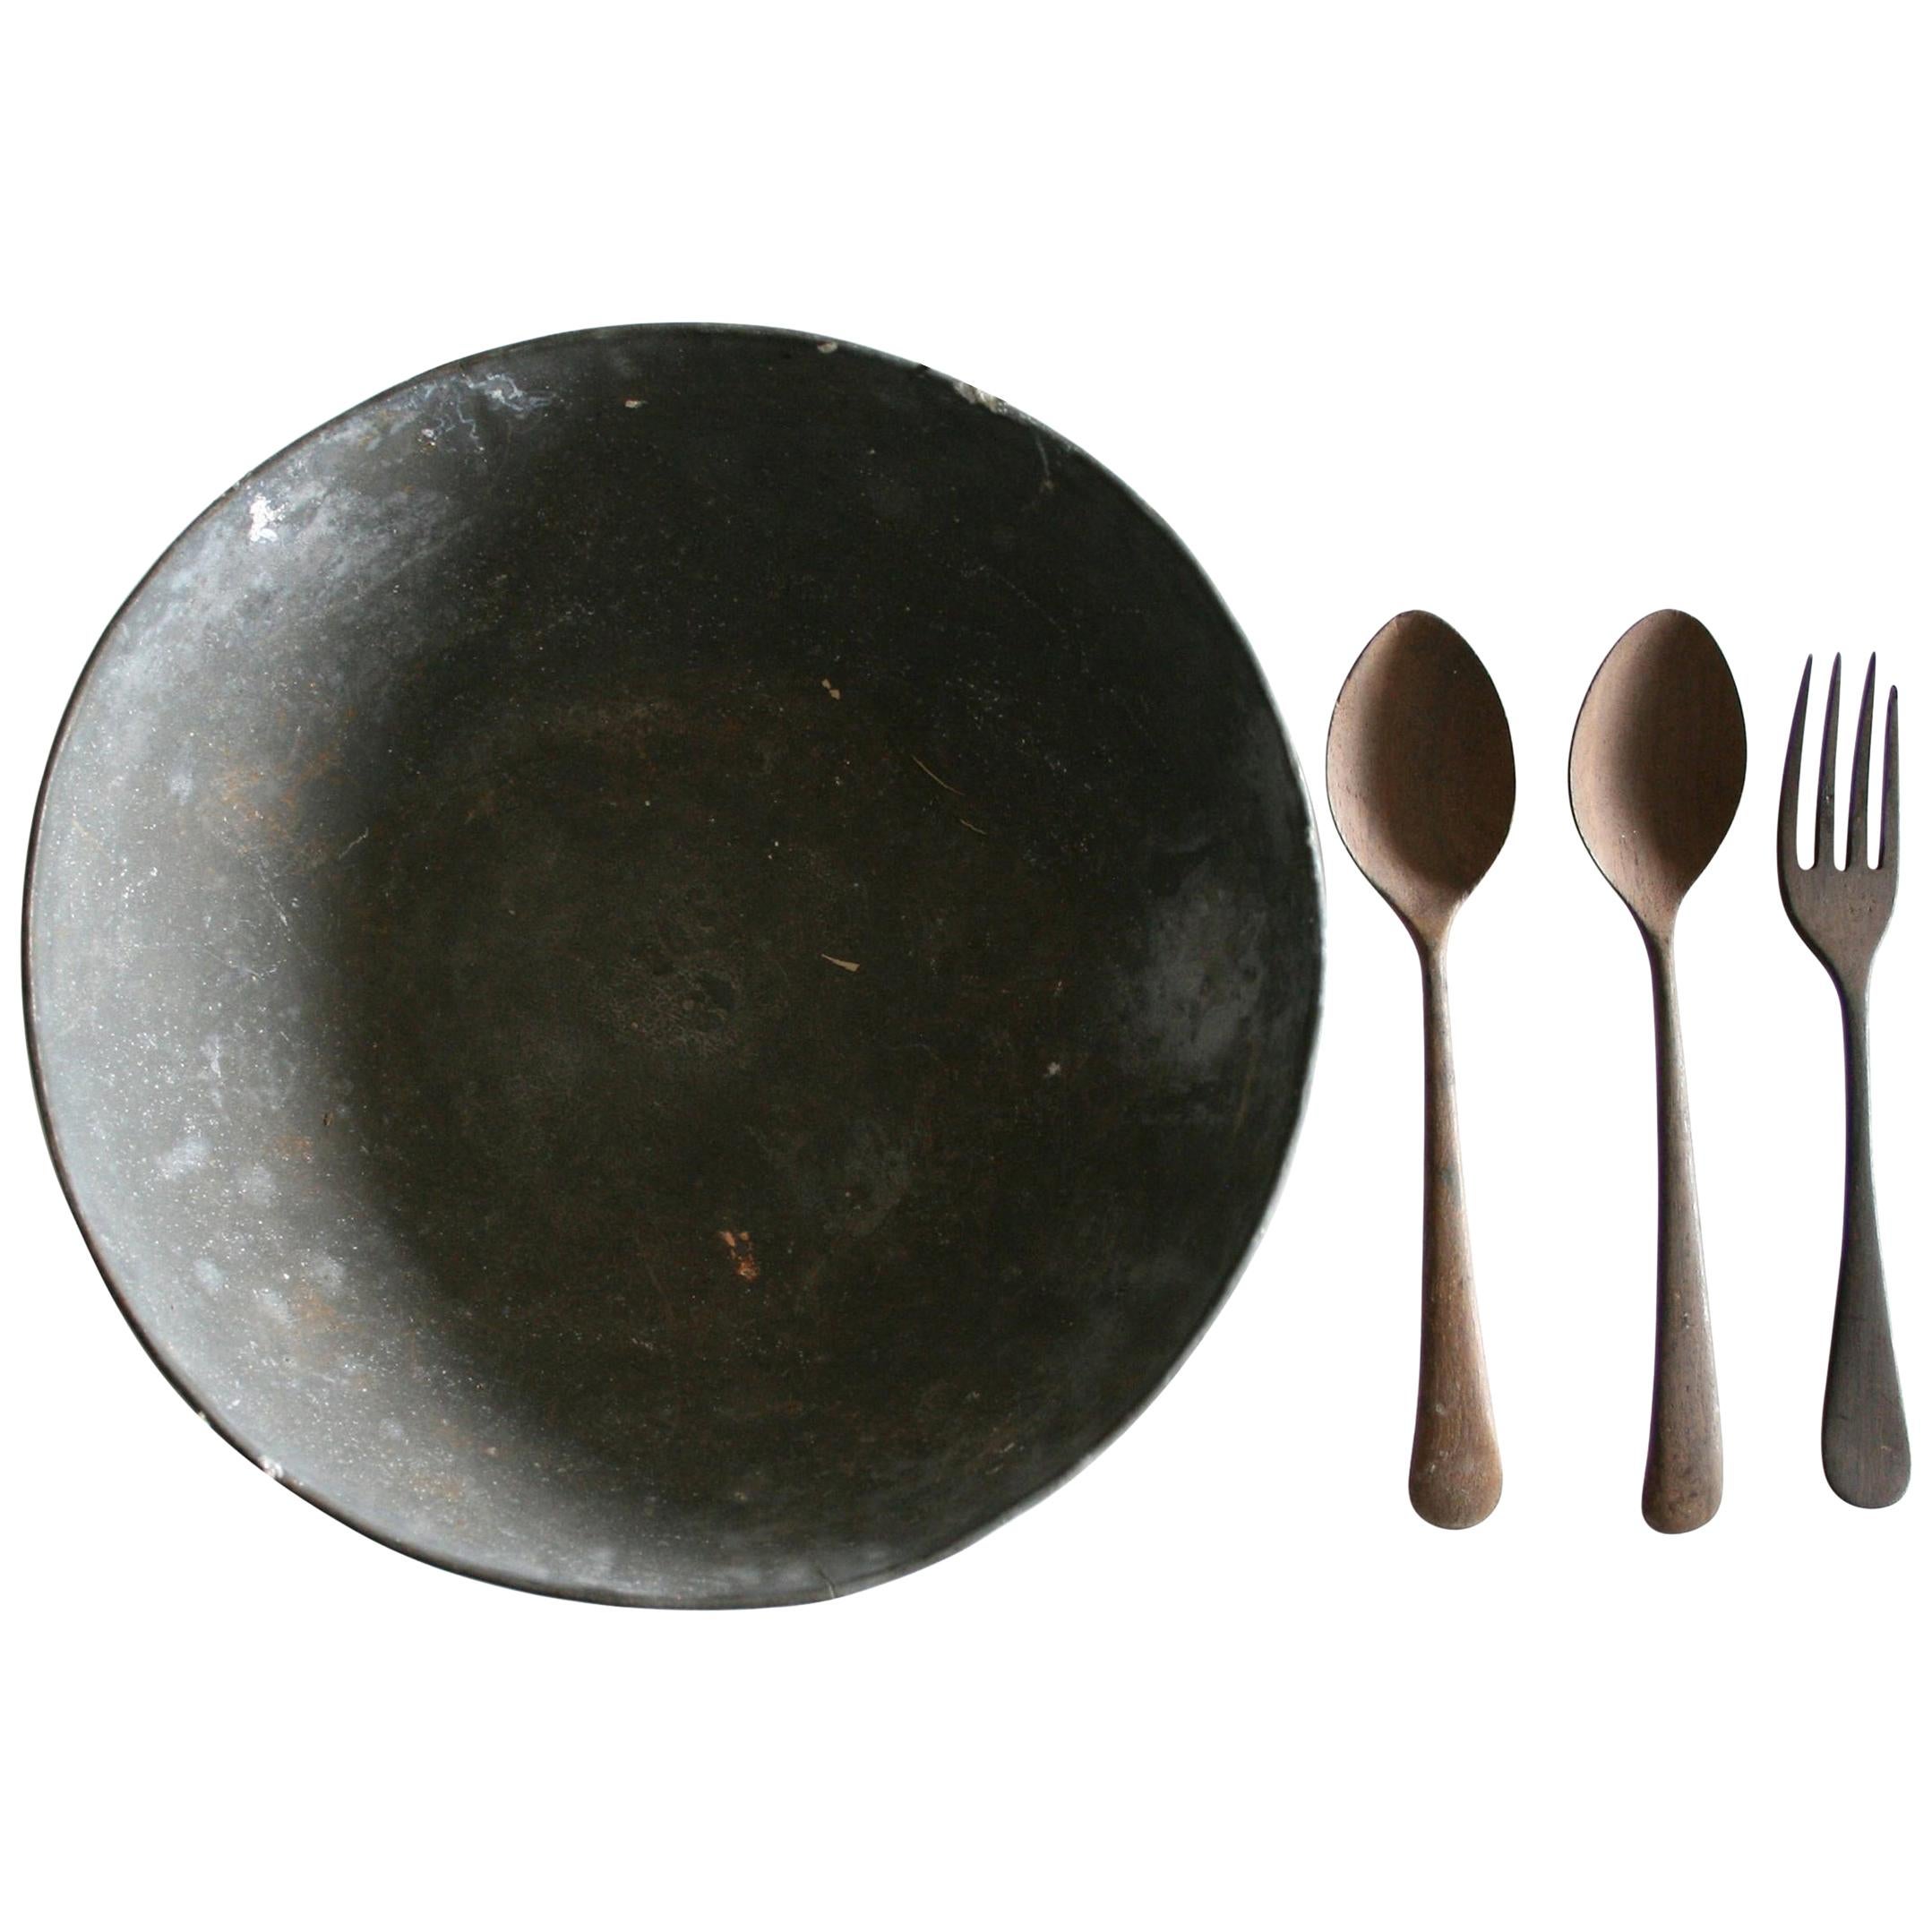 Mahatma Gandhi's Vintage 1940s Metal Prison Bowl and Wooden Fork and Spoons